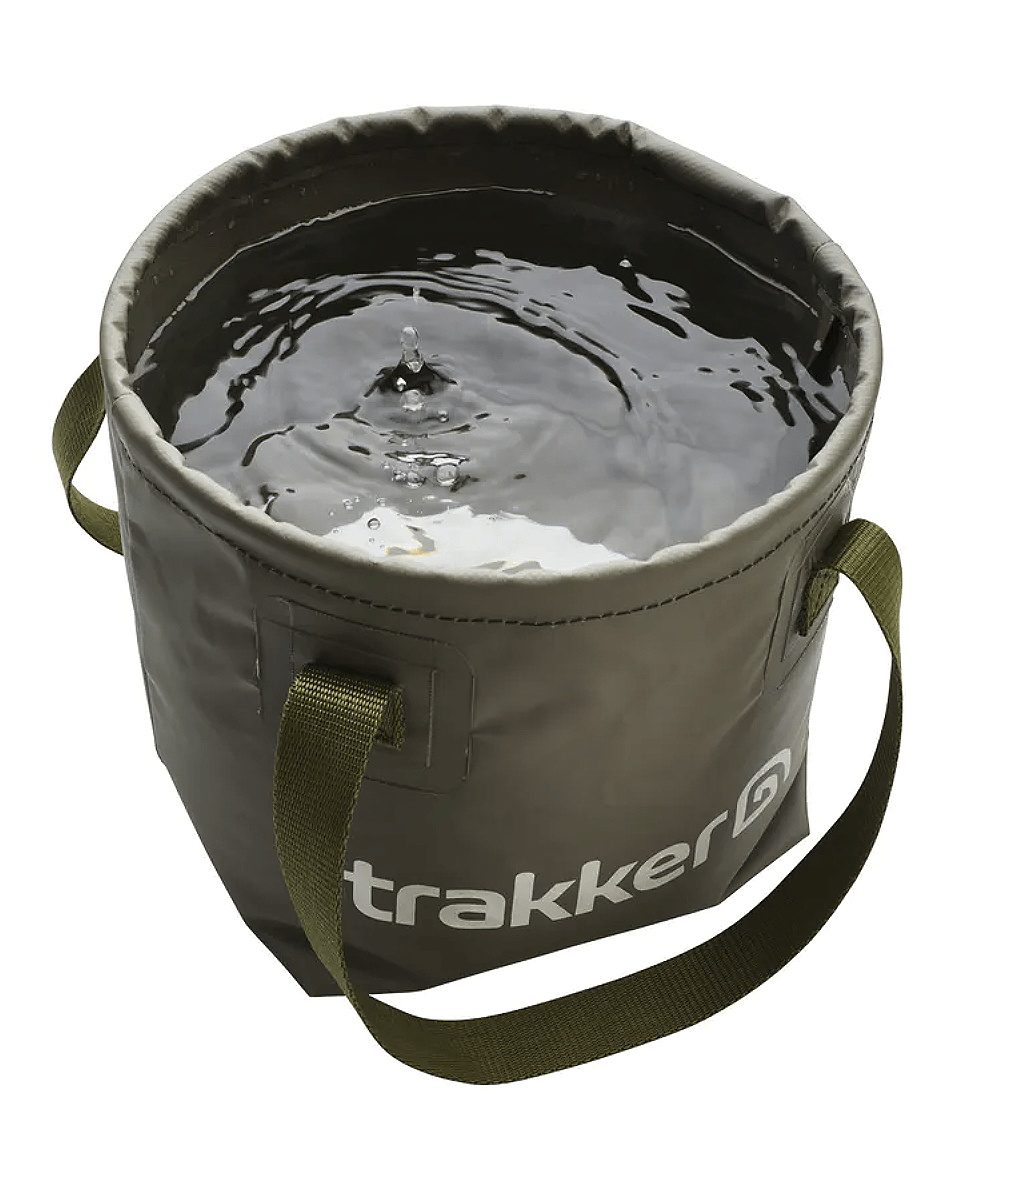 Trakker Collapsible Water Bowl.